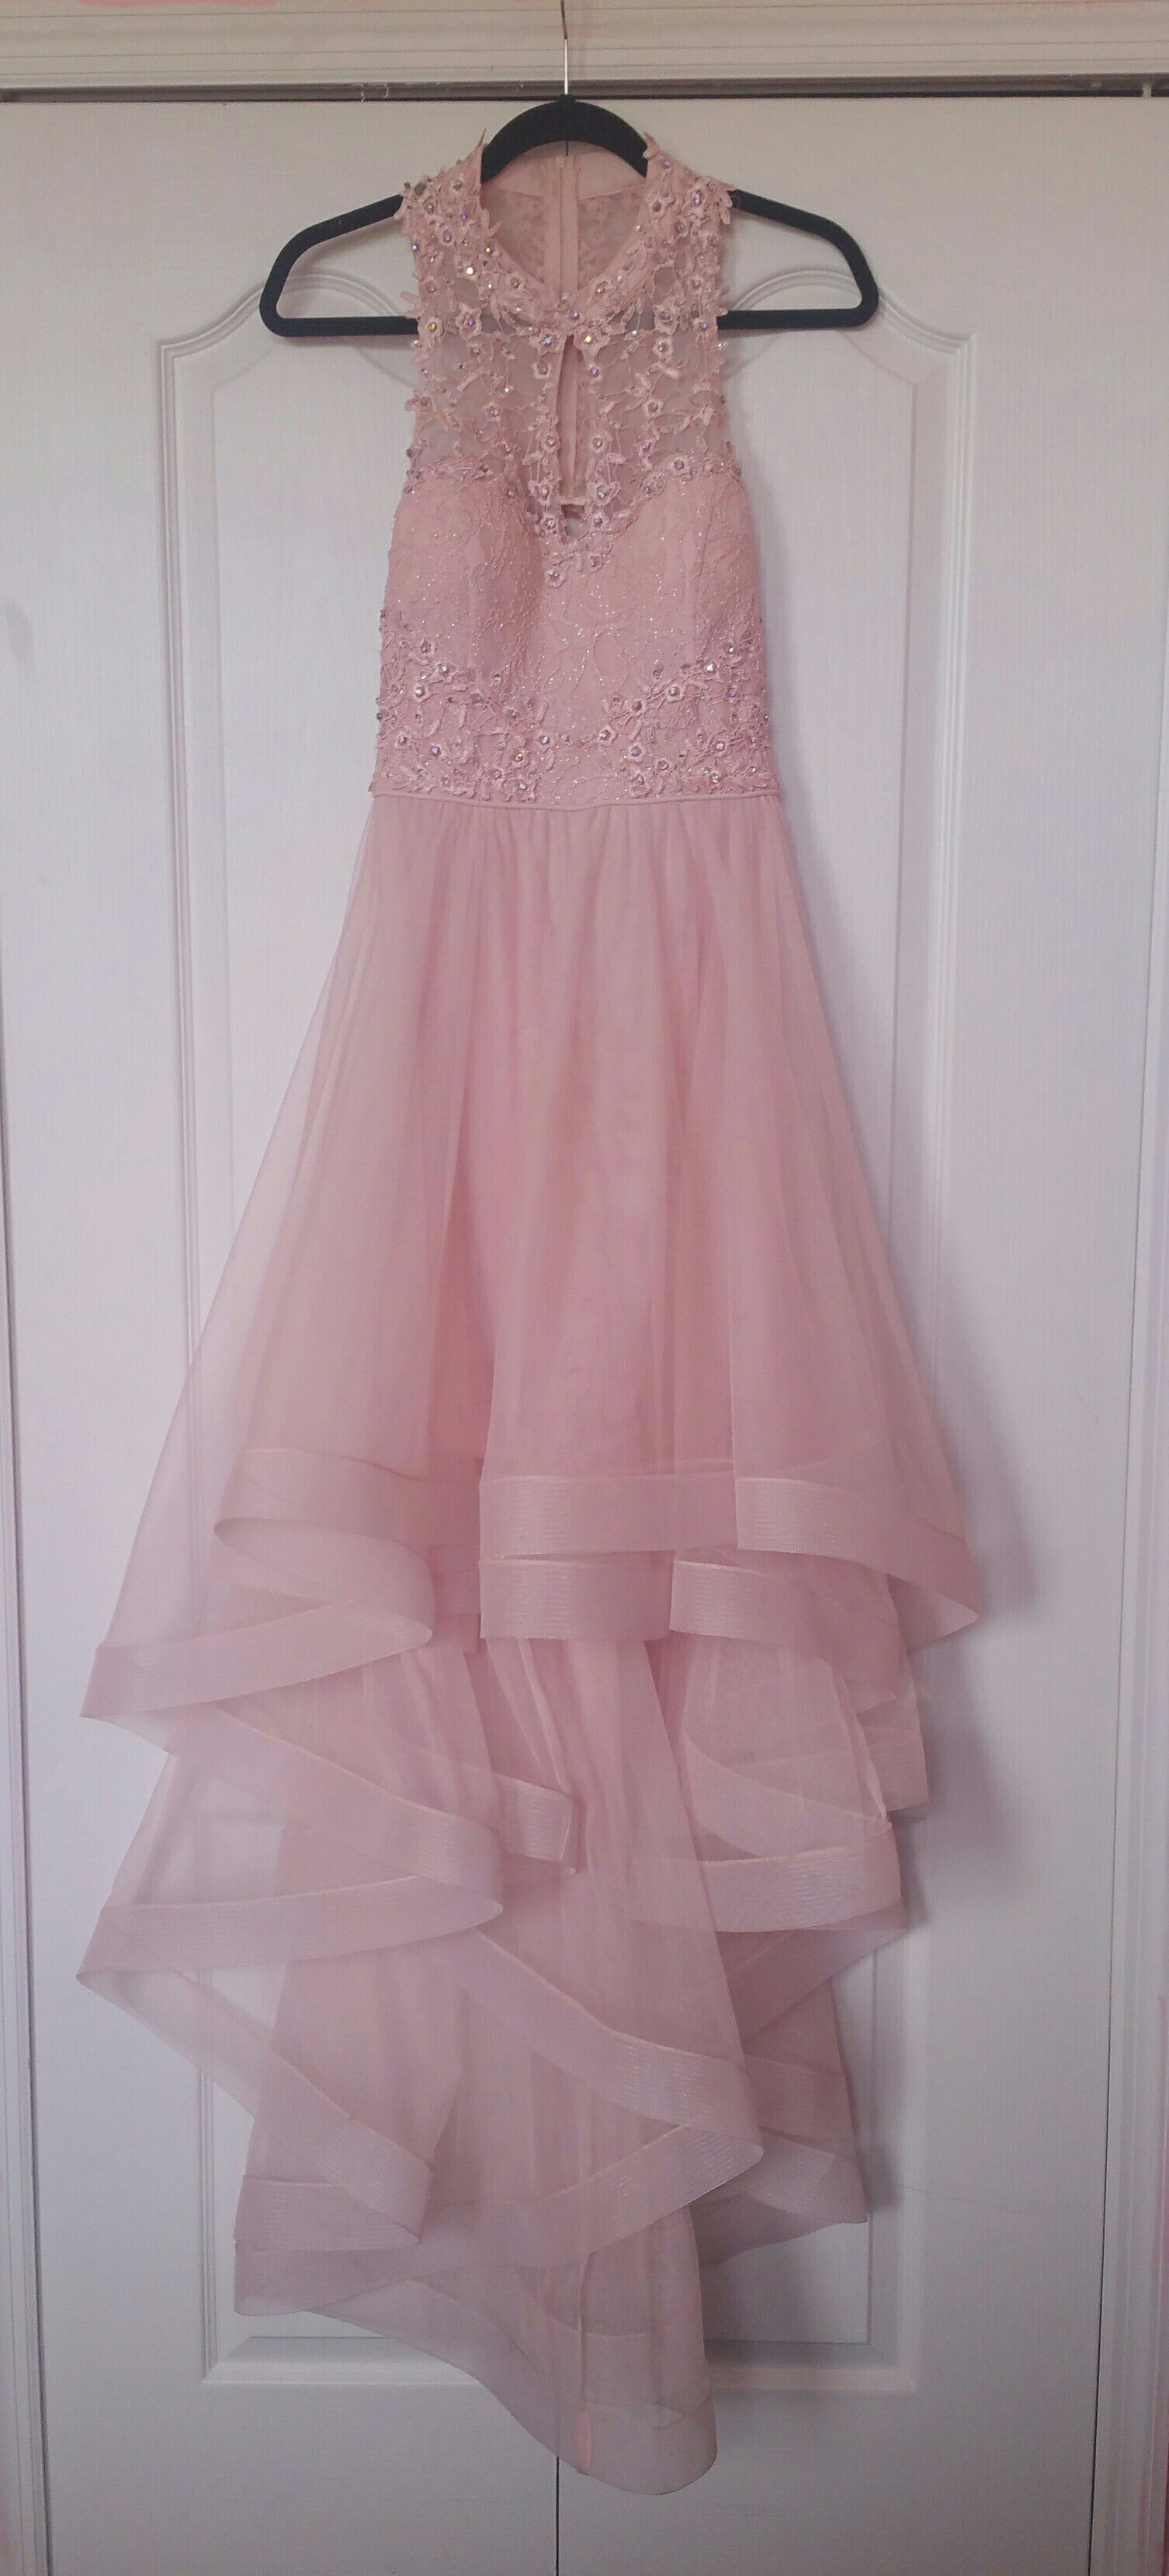 Prom Dress / Homecoming Dress / Quince Dress